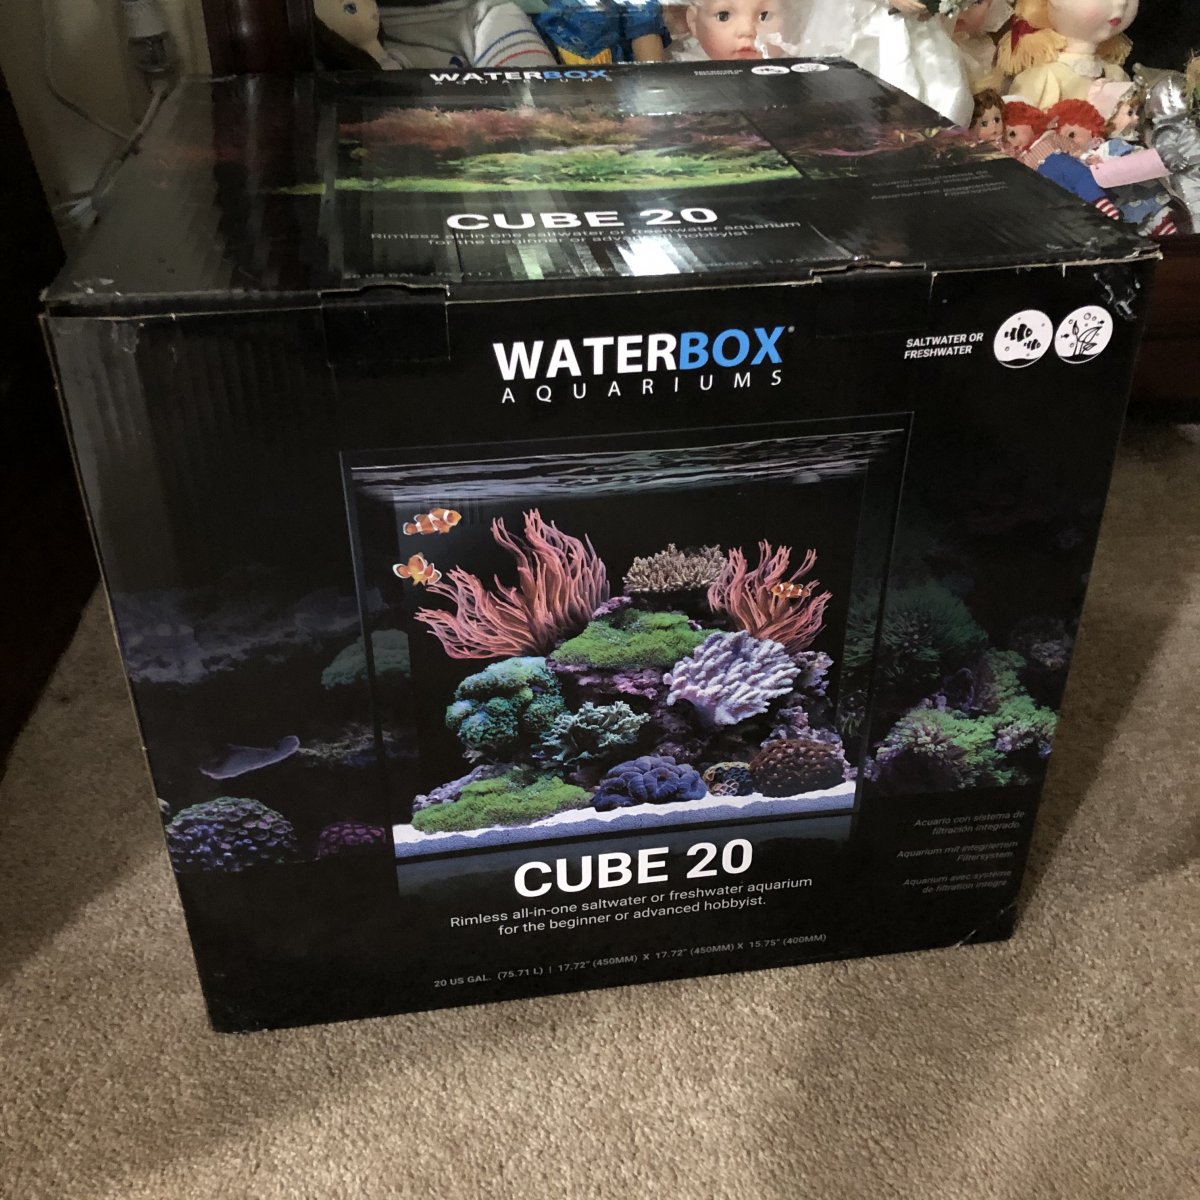 Waterbox 20 - in box.jpg